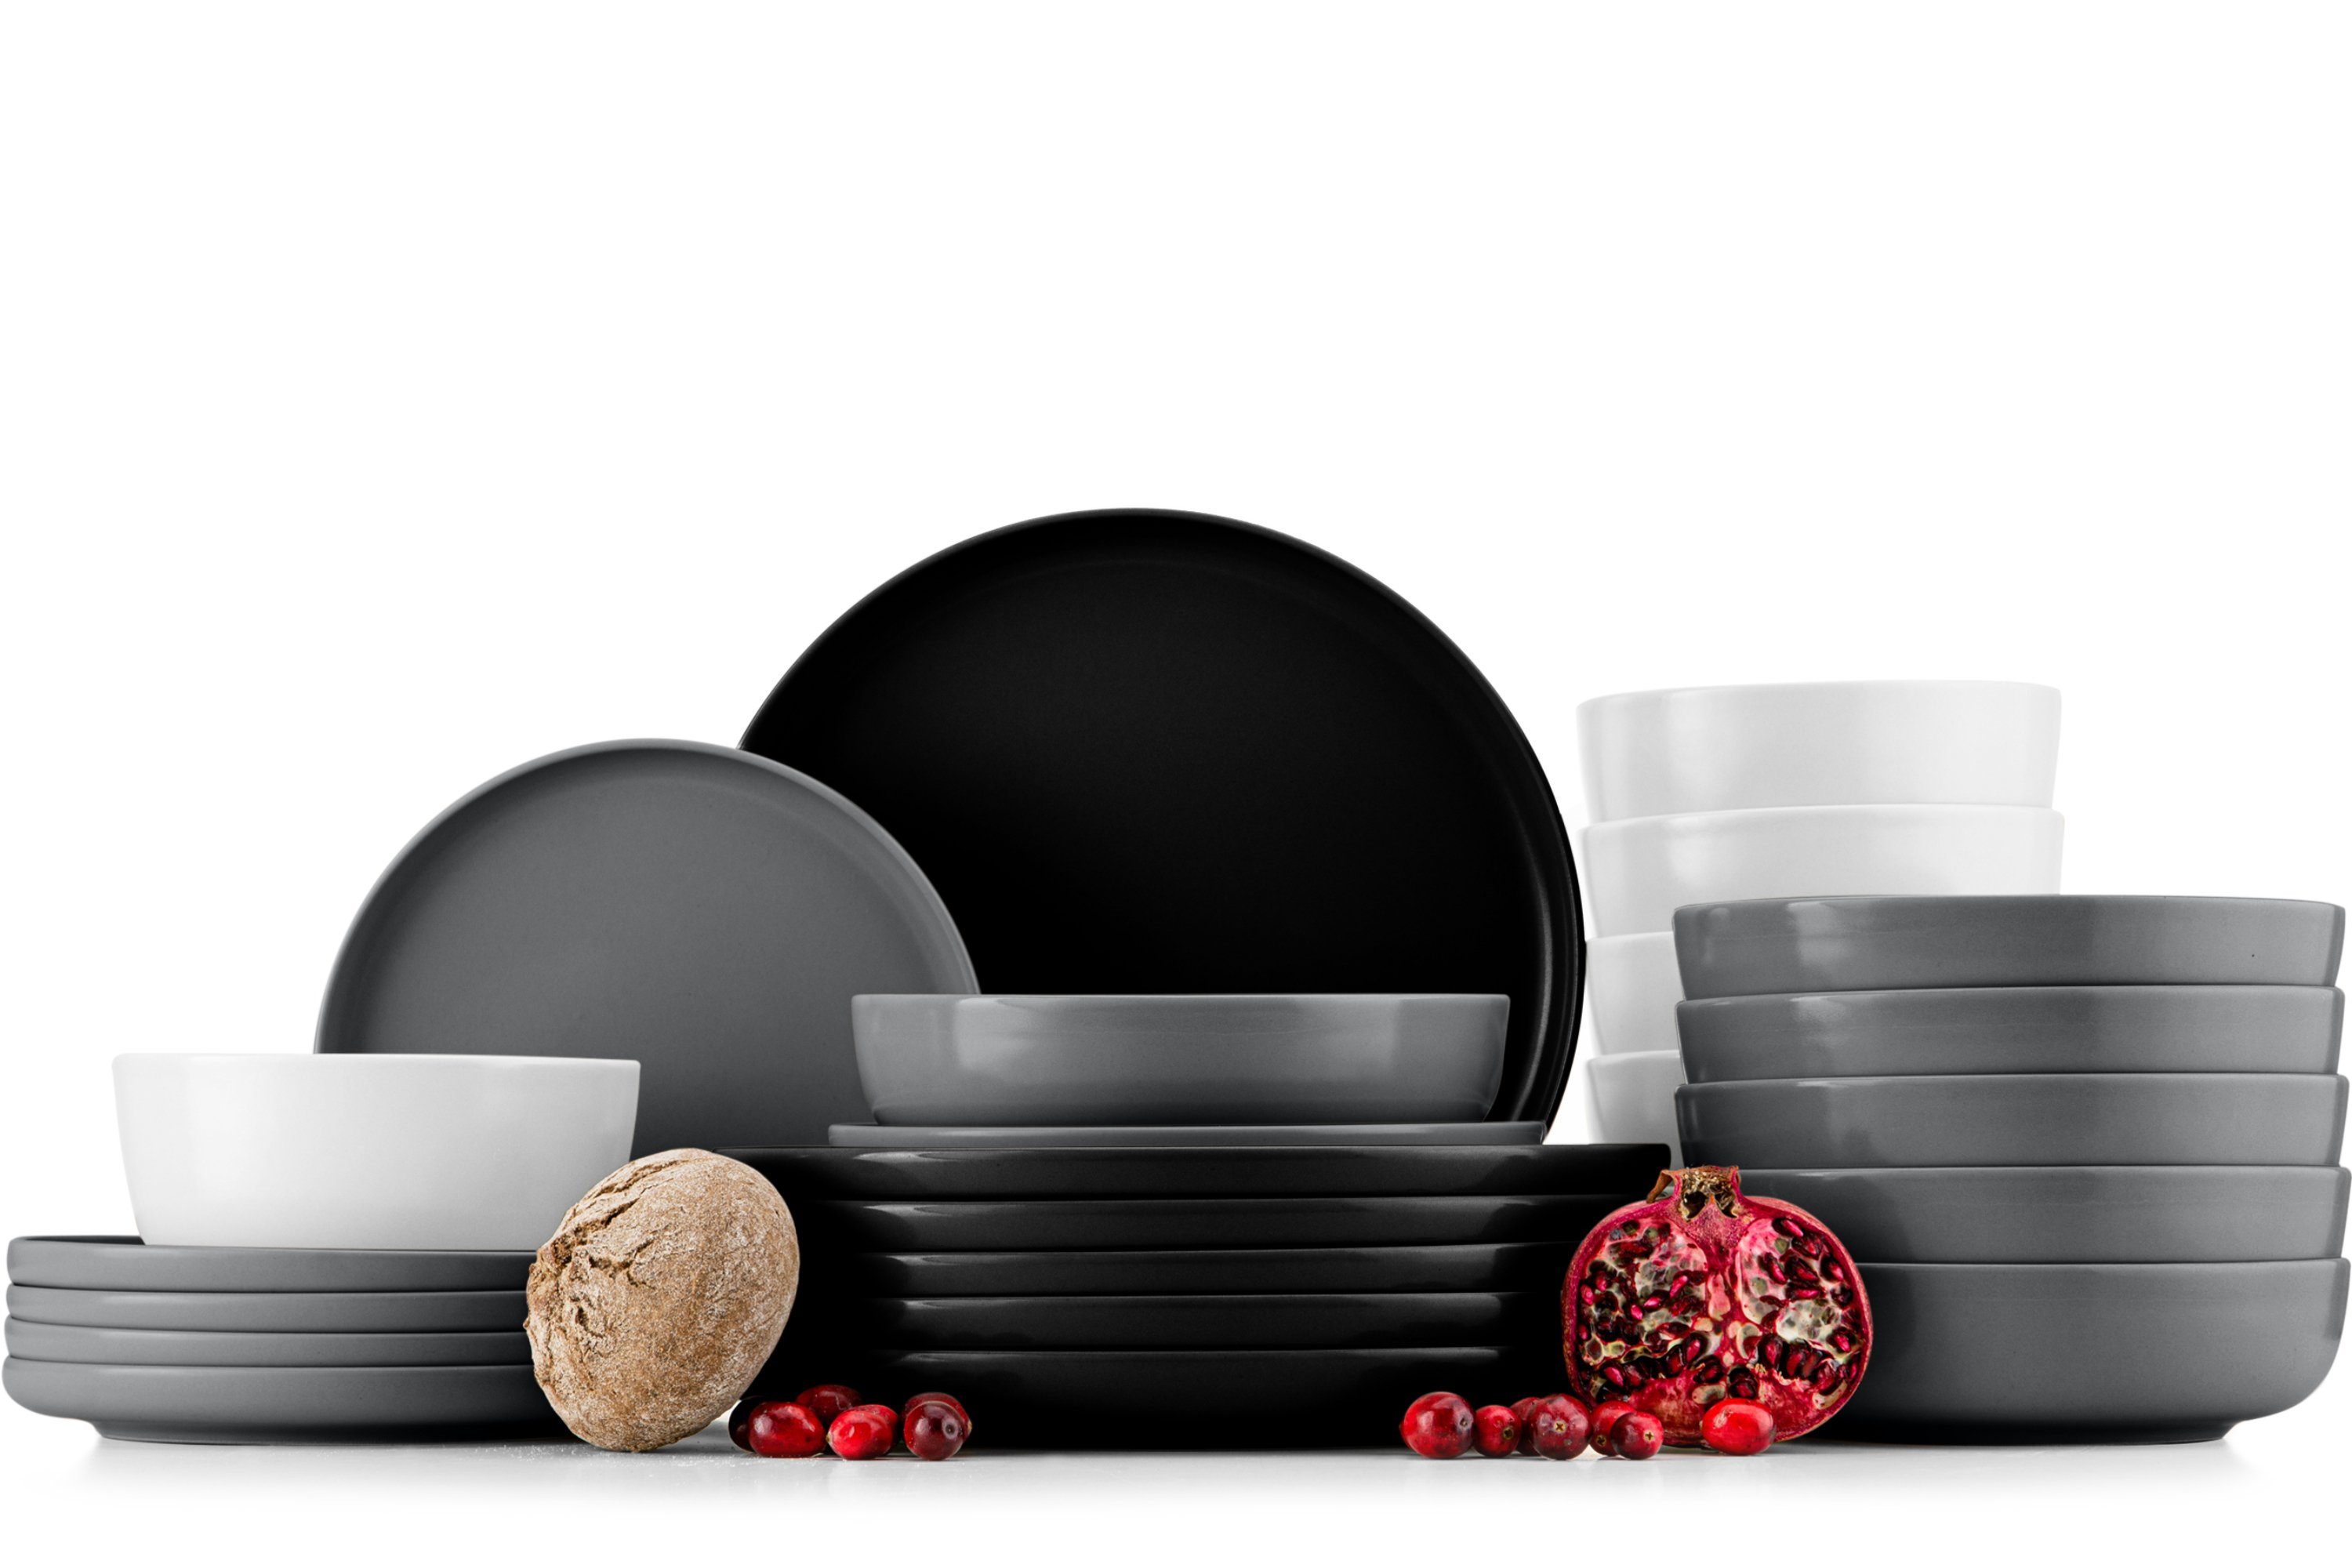 Konsimo Kombiservice VICTO Geschirrset hergestellt in der EU (24-tlg), 6 Personen, Steingut, spülmaschinengeeignet, mikrowellengeeignet, mehrfarbig, matt matt schwarz/grau/weiß/grau